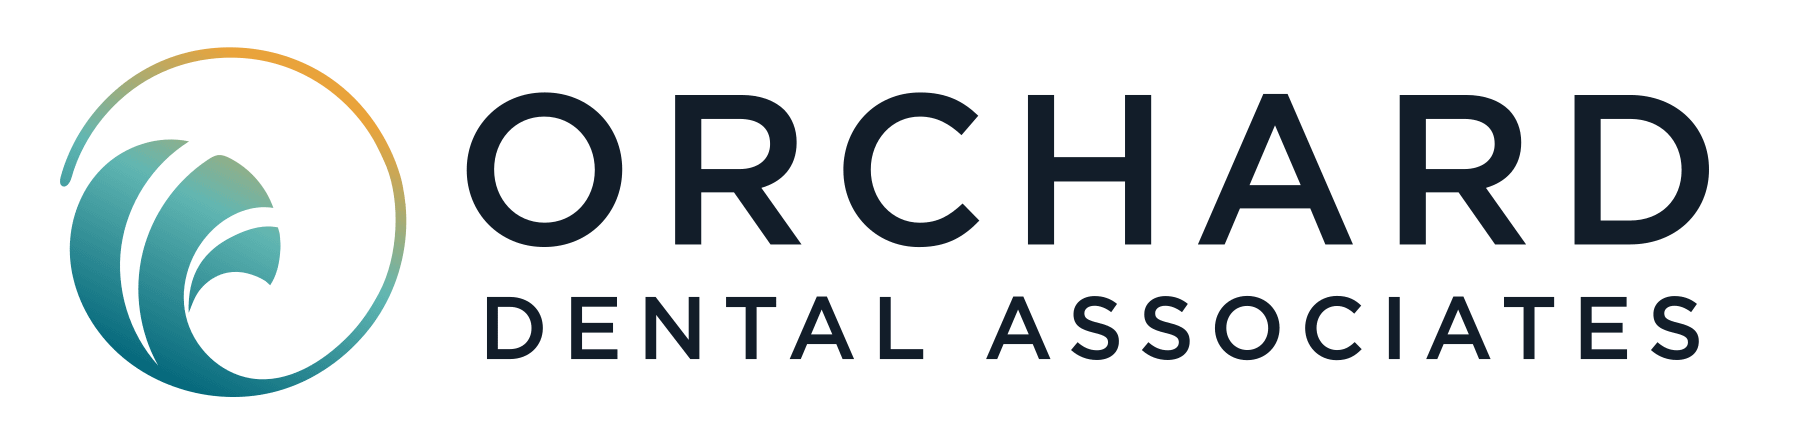 Orchard Dental Associates logo